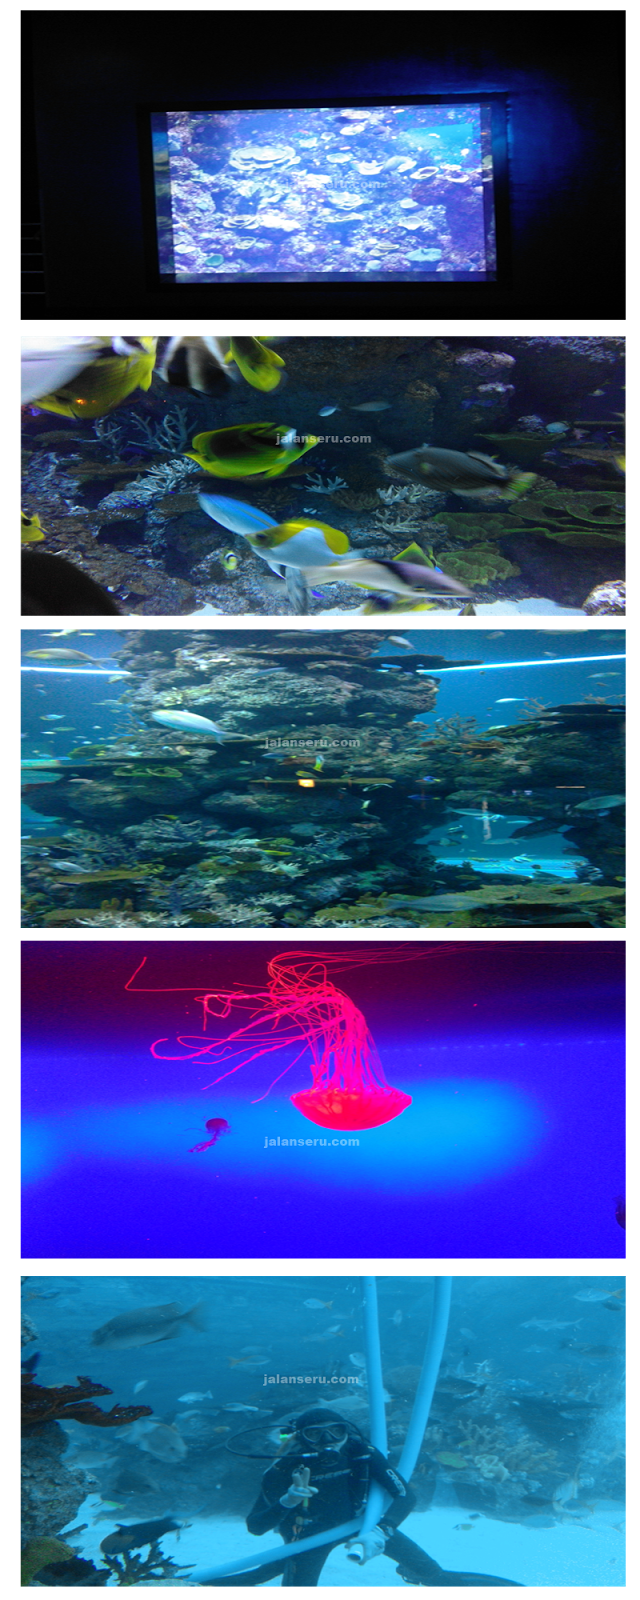 Wisata Aquarium Terbesar Di Dunia S.E.A Aquarium Singapure